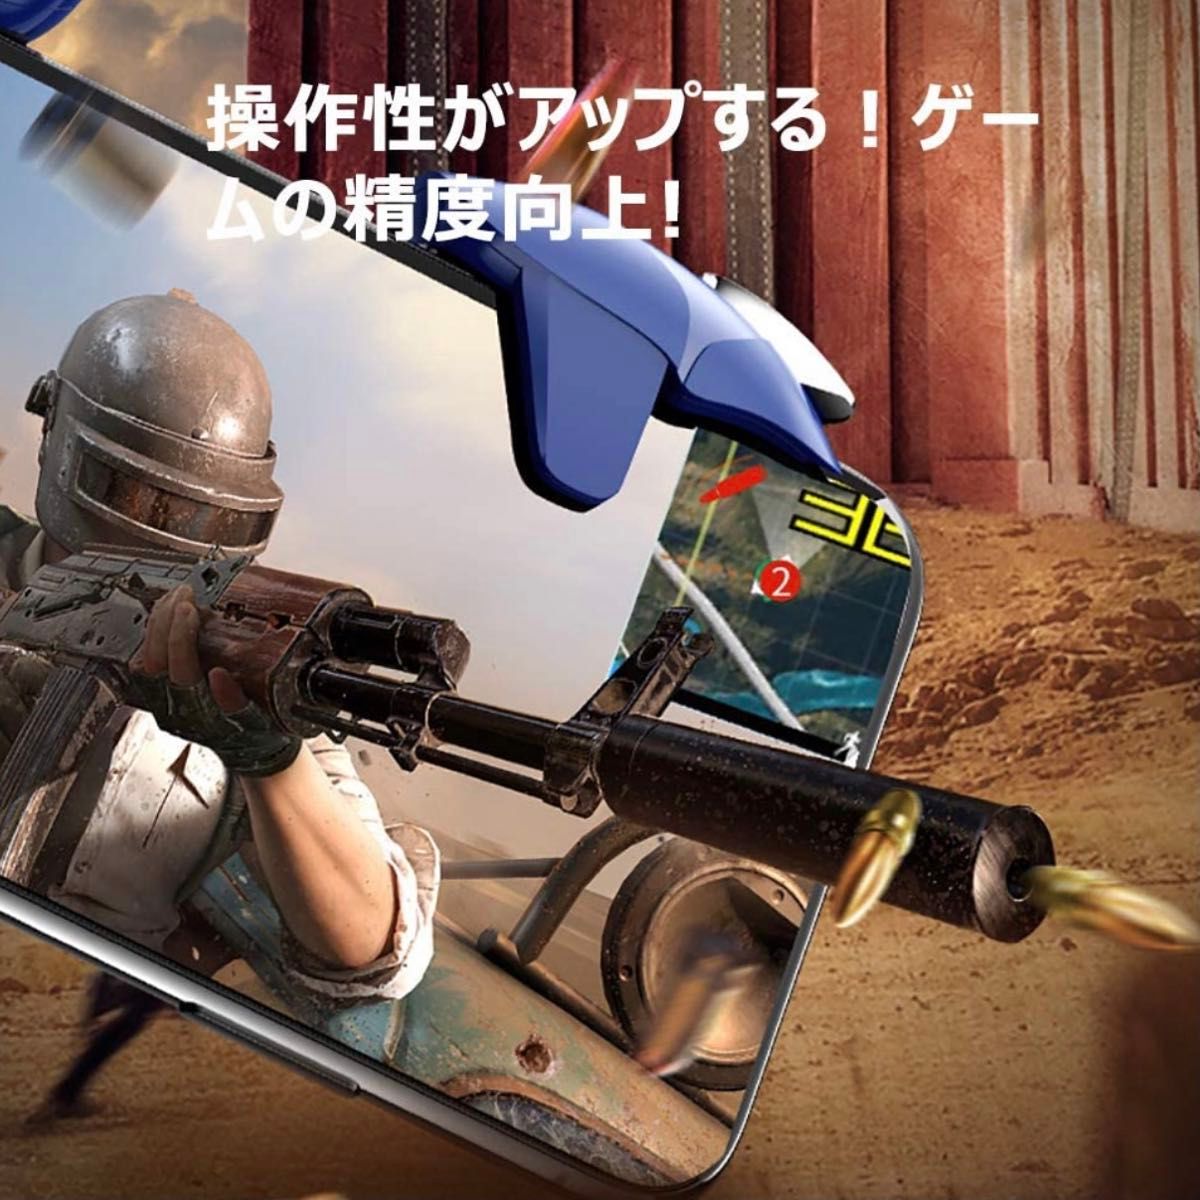 Blueshark スマホ コントローラー 新品 射撃ボタン トリガー ゲーム モバイル 荒野行動 CoD Mobile PUBG